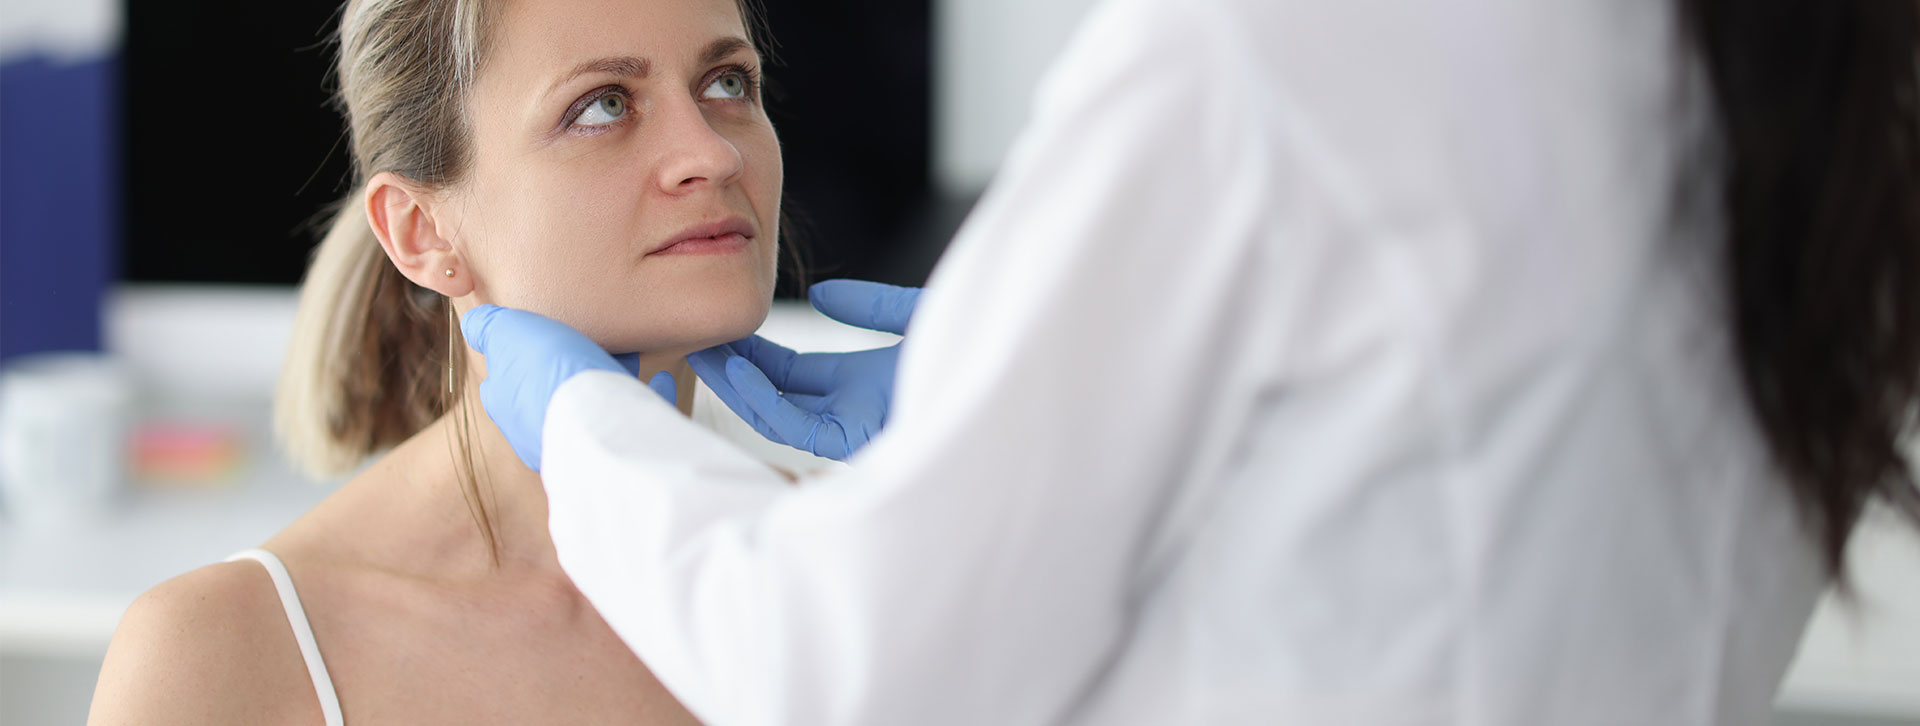 Doctor examining patients submandibular lymph nodes in clinic